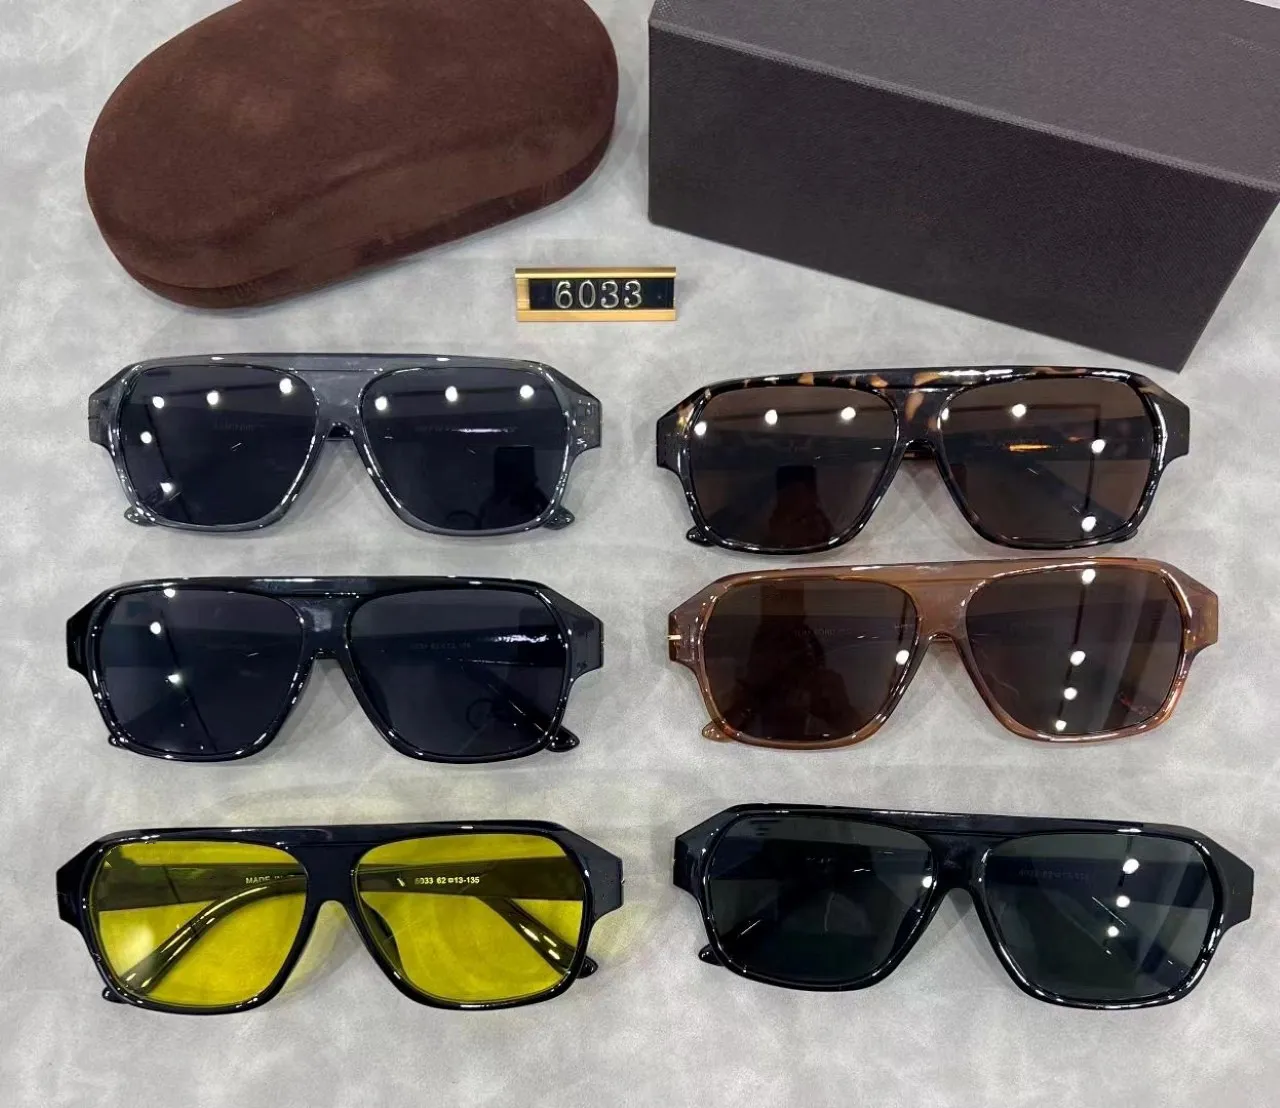 sunglasses for men women classic Summer Fashion Style Square metal and Plank Frame eye glasses UV Protection Lens 6033 Tom sunglasses